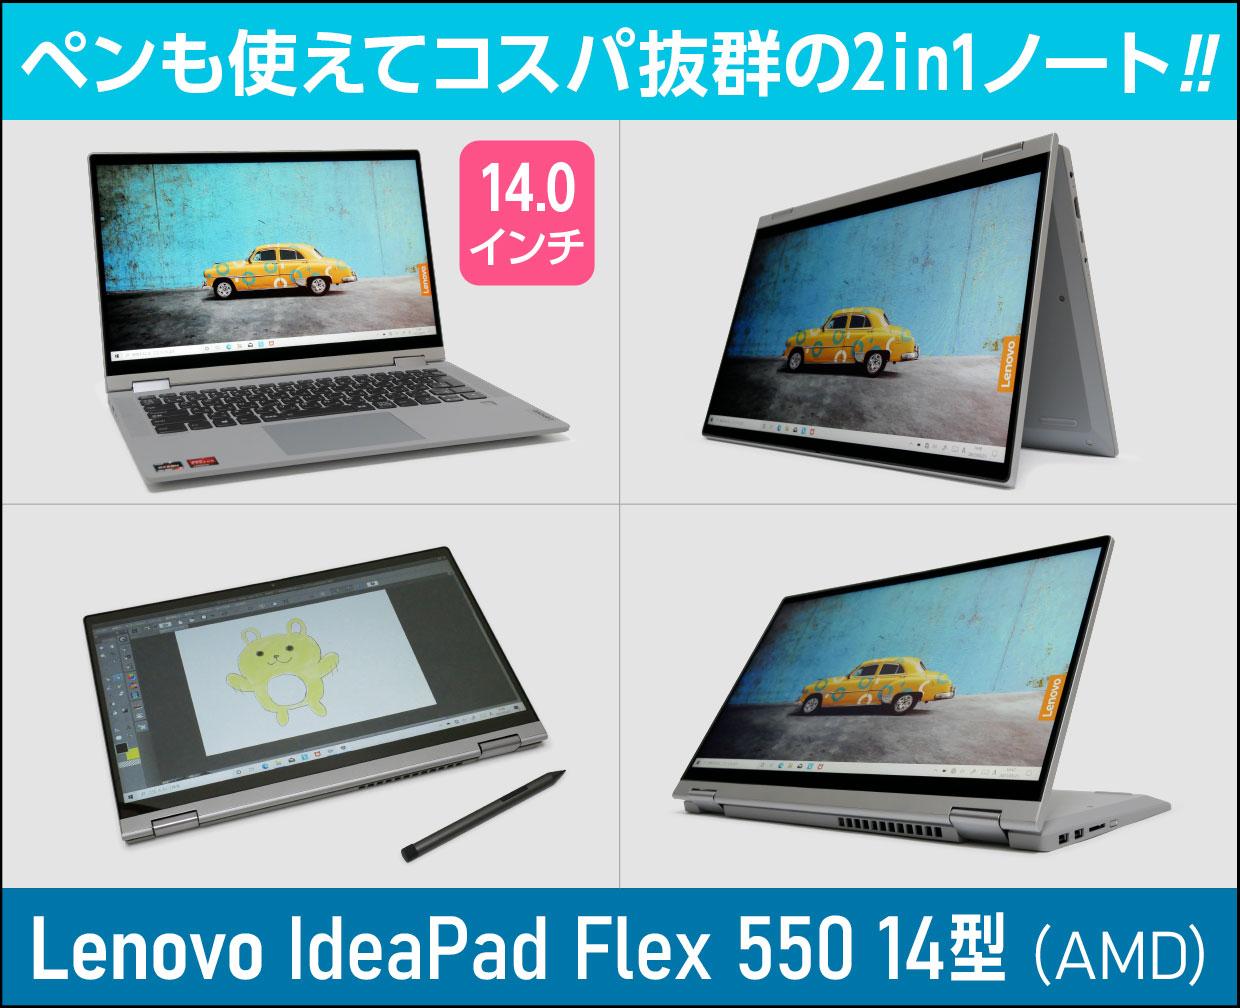 Lenovo Ideapad Flex 550 プラチナグレー